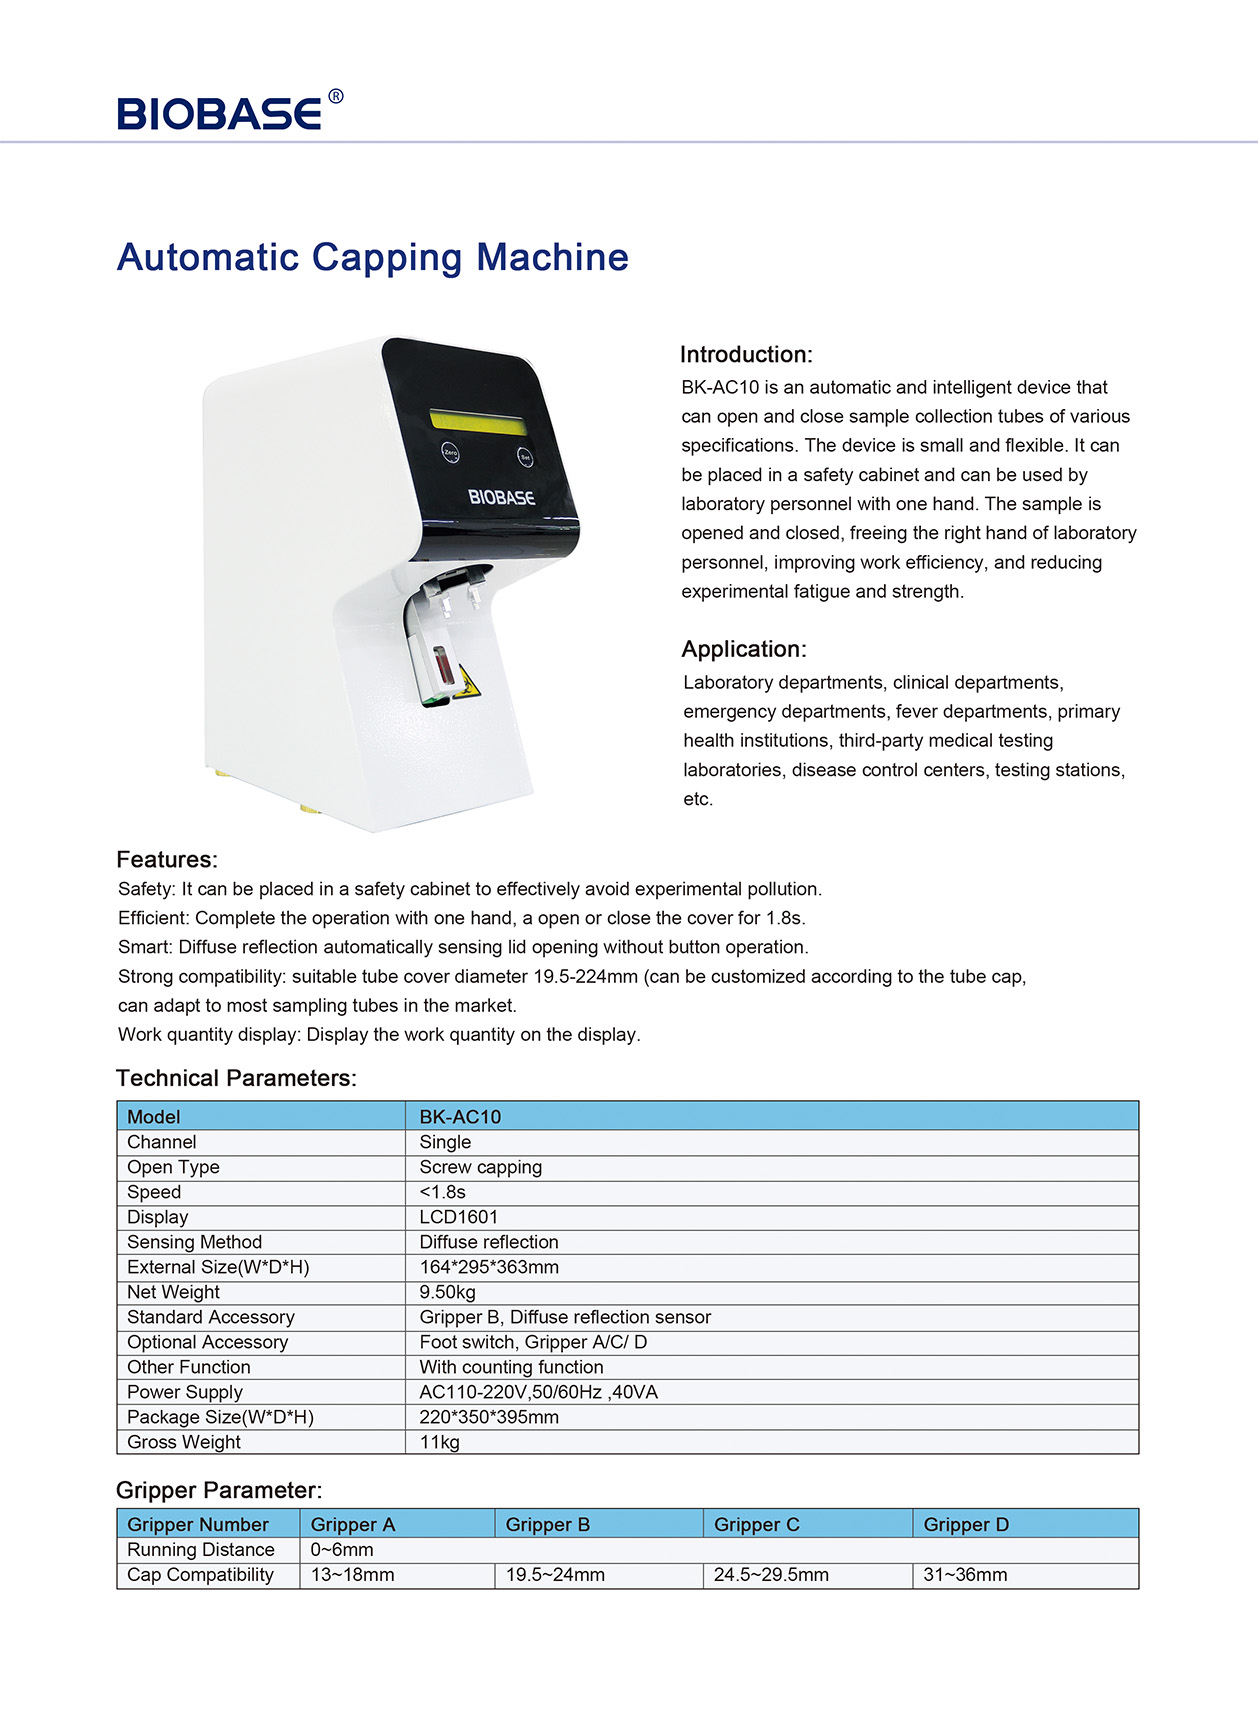 Automatic Capping Machine BK-AC10